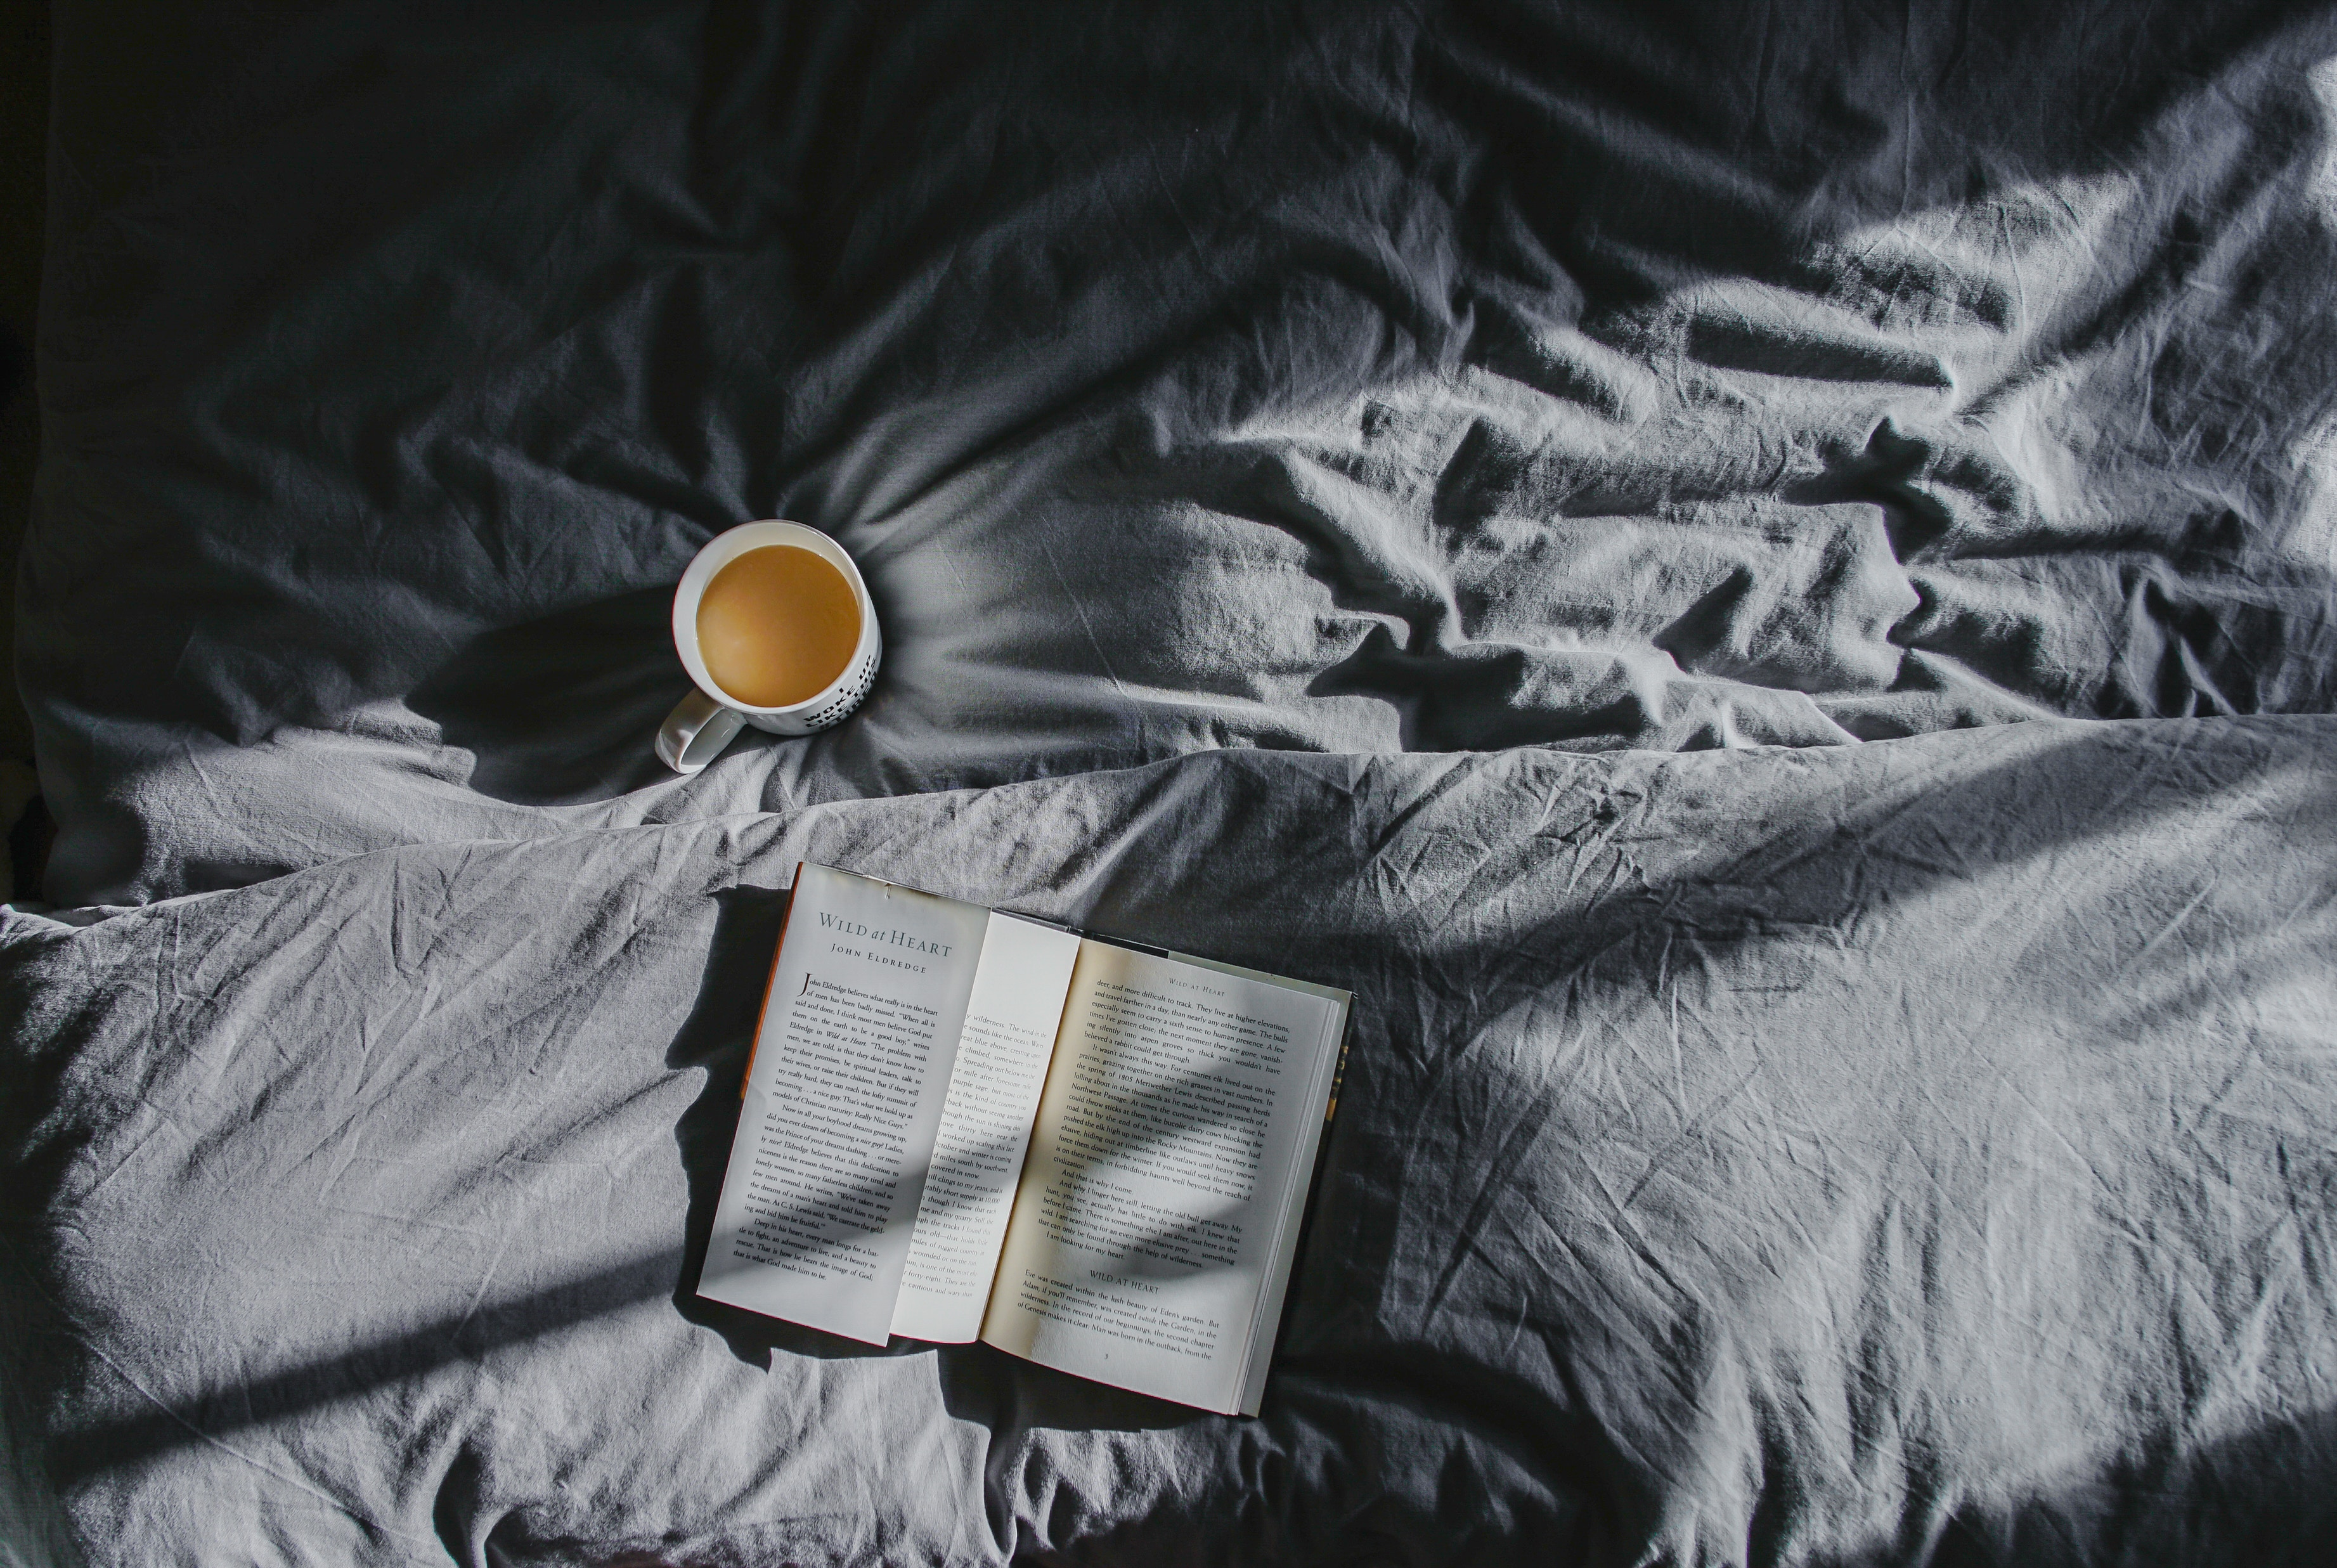 coffee, miscellaneous, miscellanea, shadow, book, bed mobile wallpaper